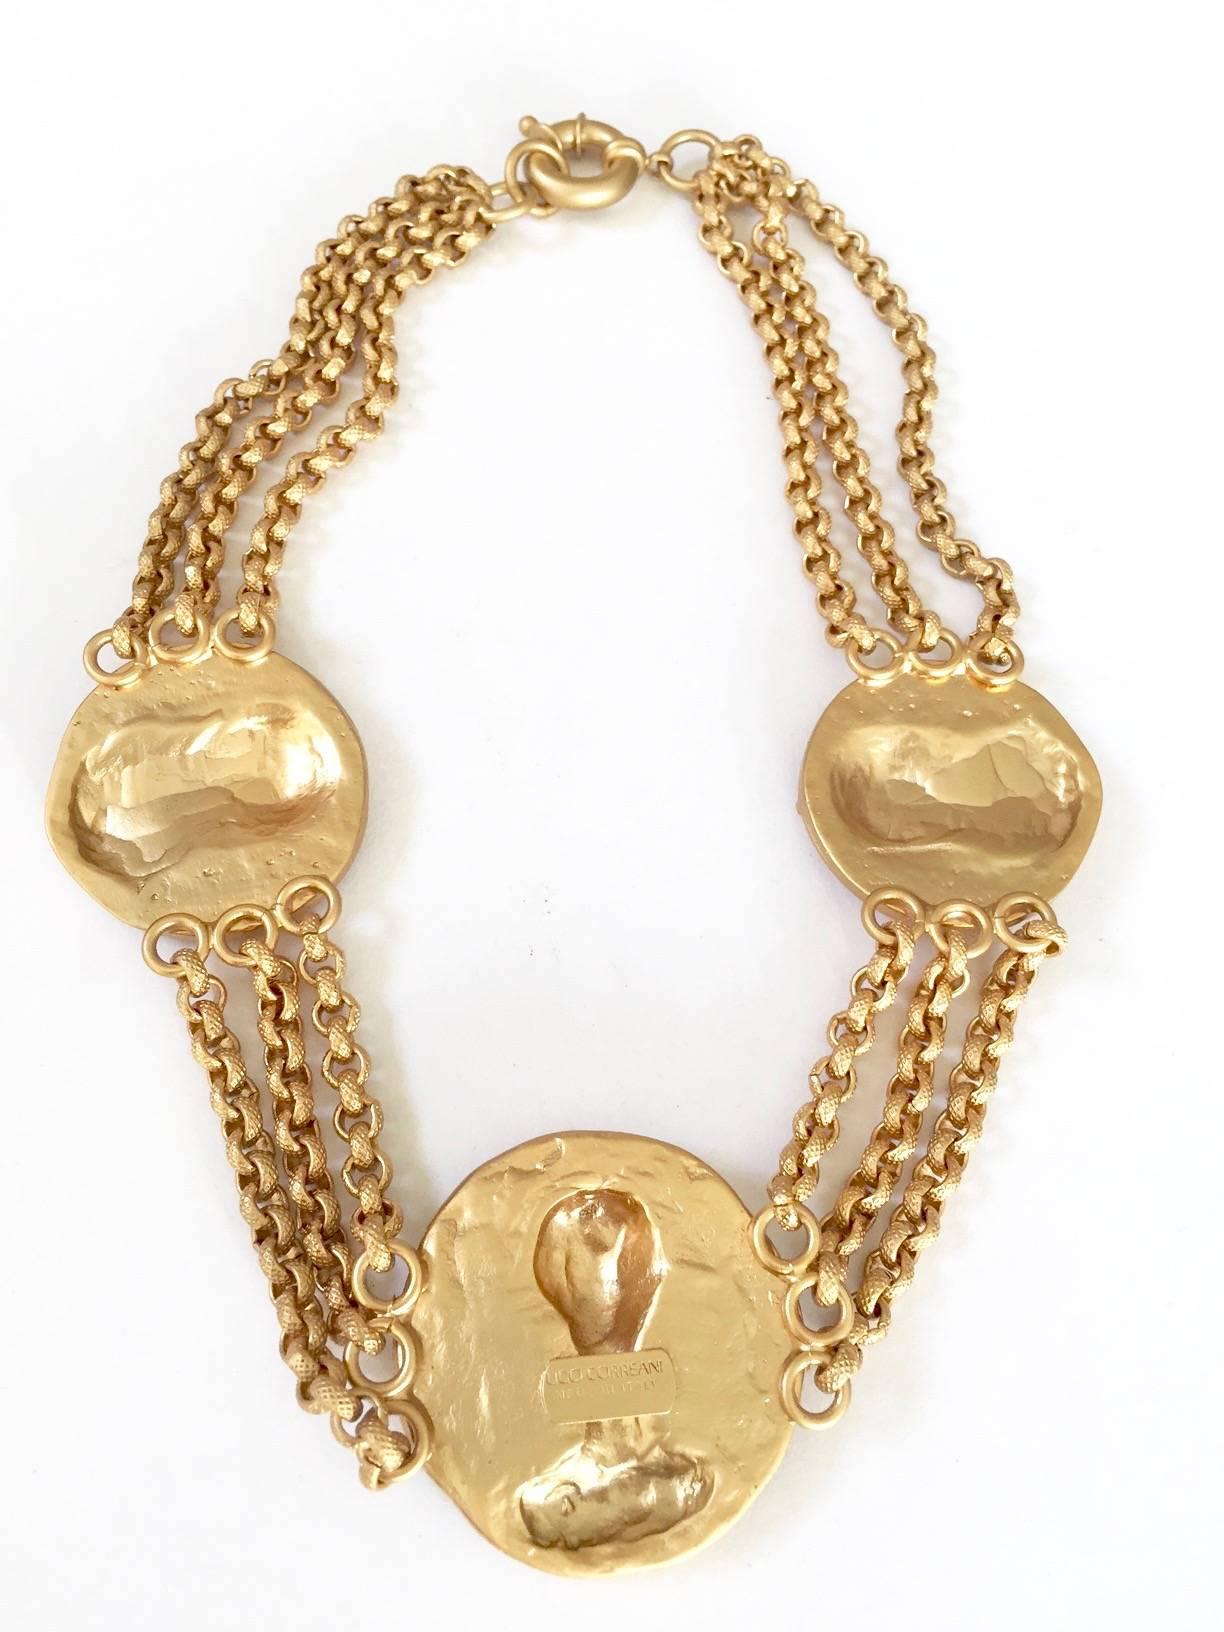 1980s Gianni Versace triple romanesque medallion gilded metal necklace by Ugo Correani.
Measurement:
chain: 17